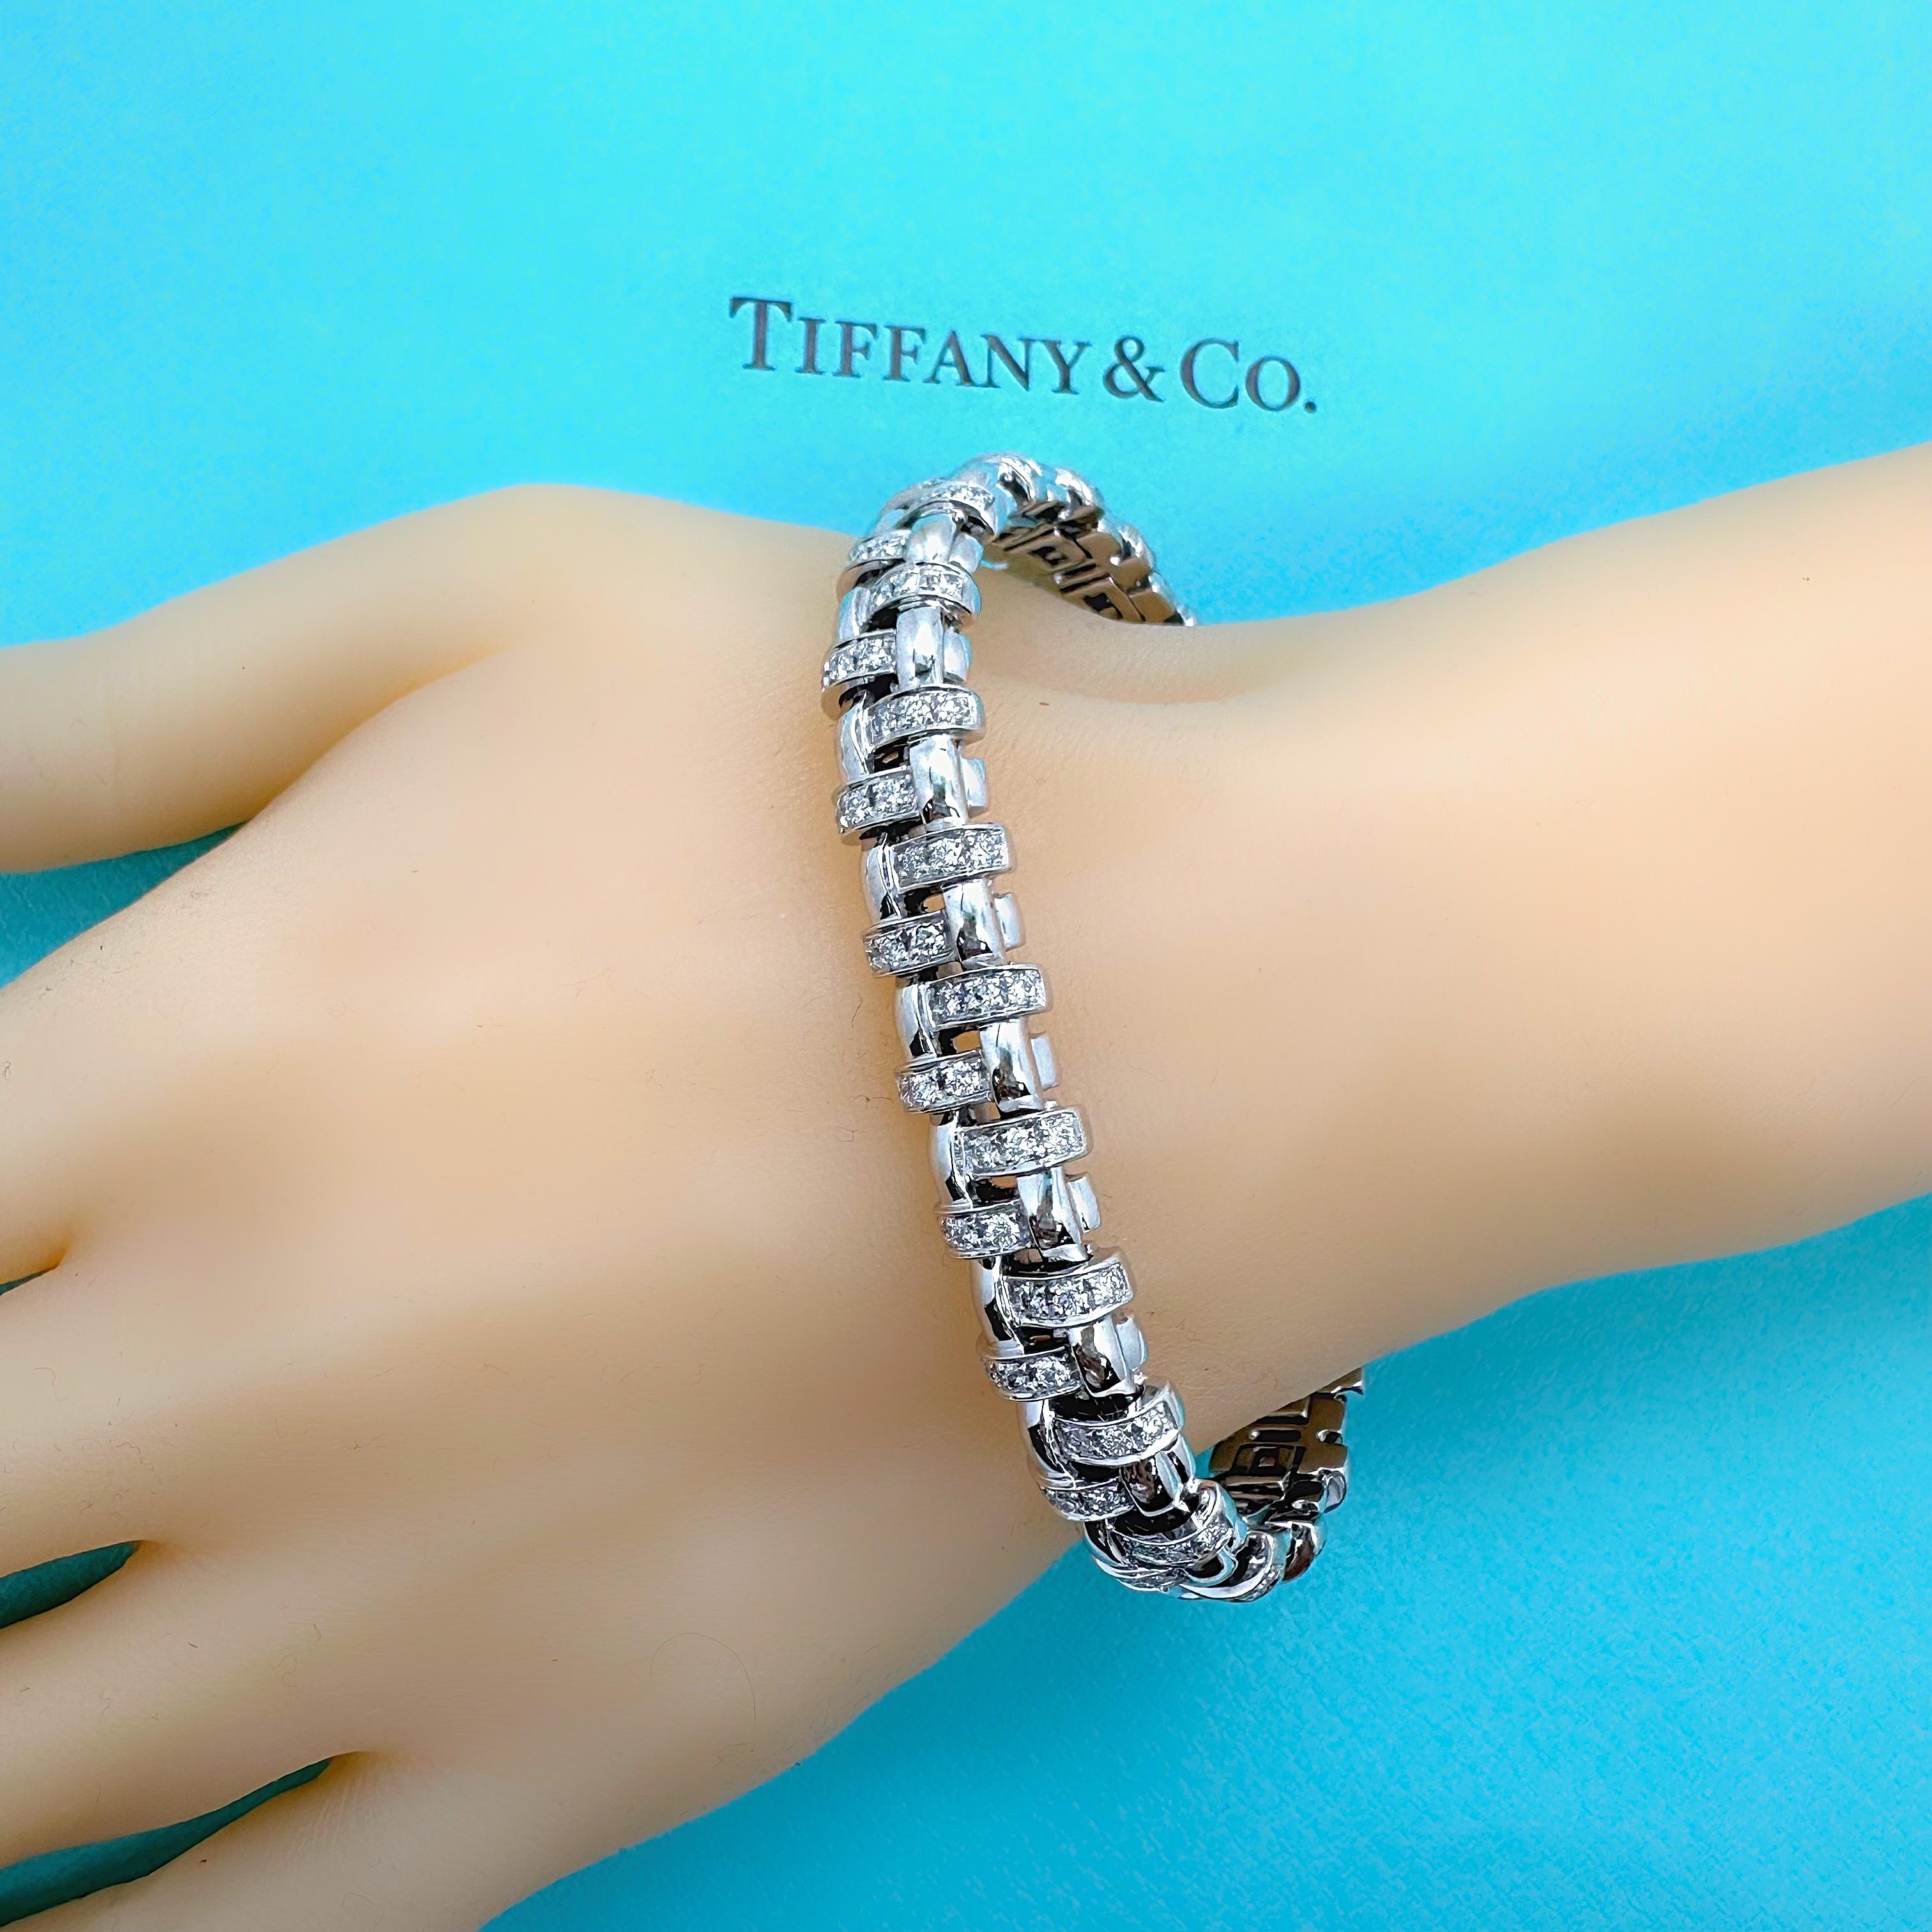 Tiffany & Co. Vannerie Basket Weave Diamond Bracelet in 18kt White Gold For Sale 5